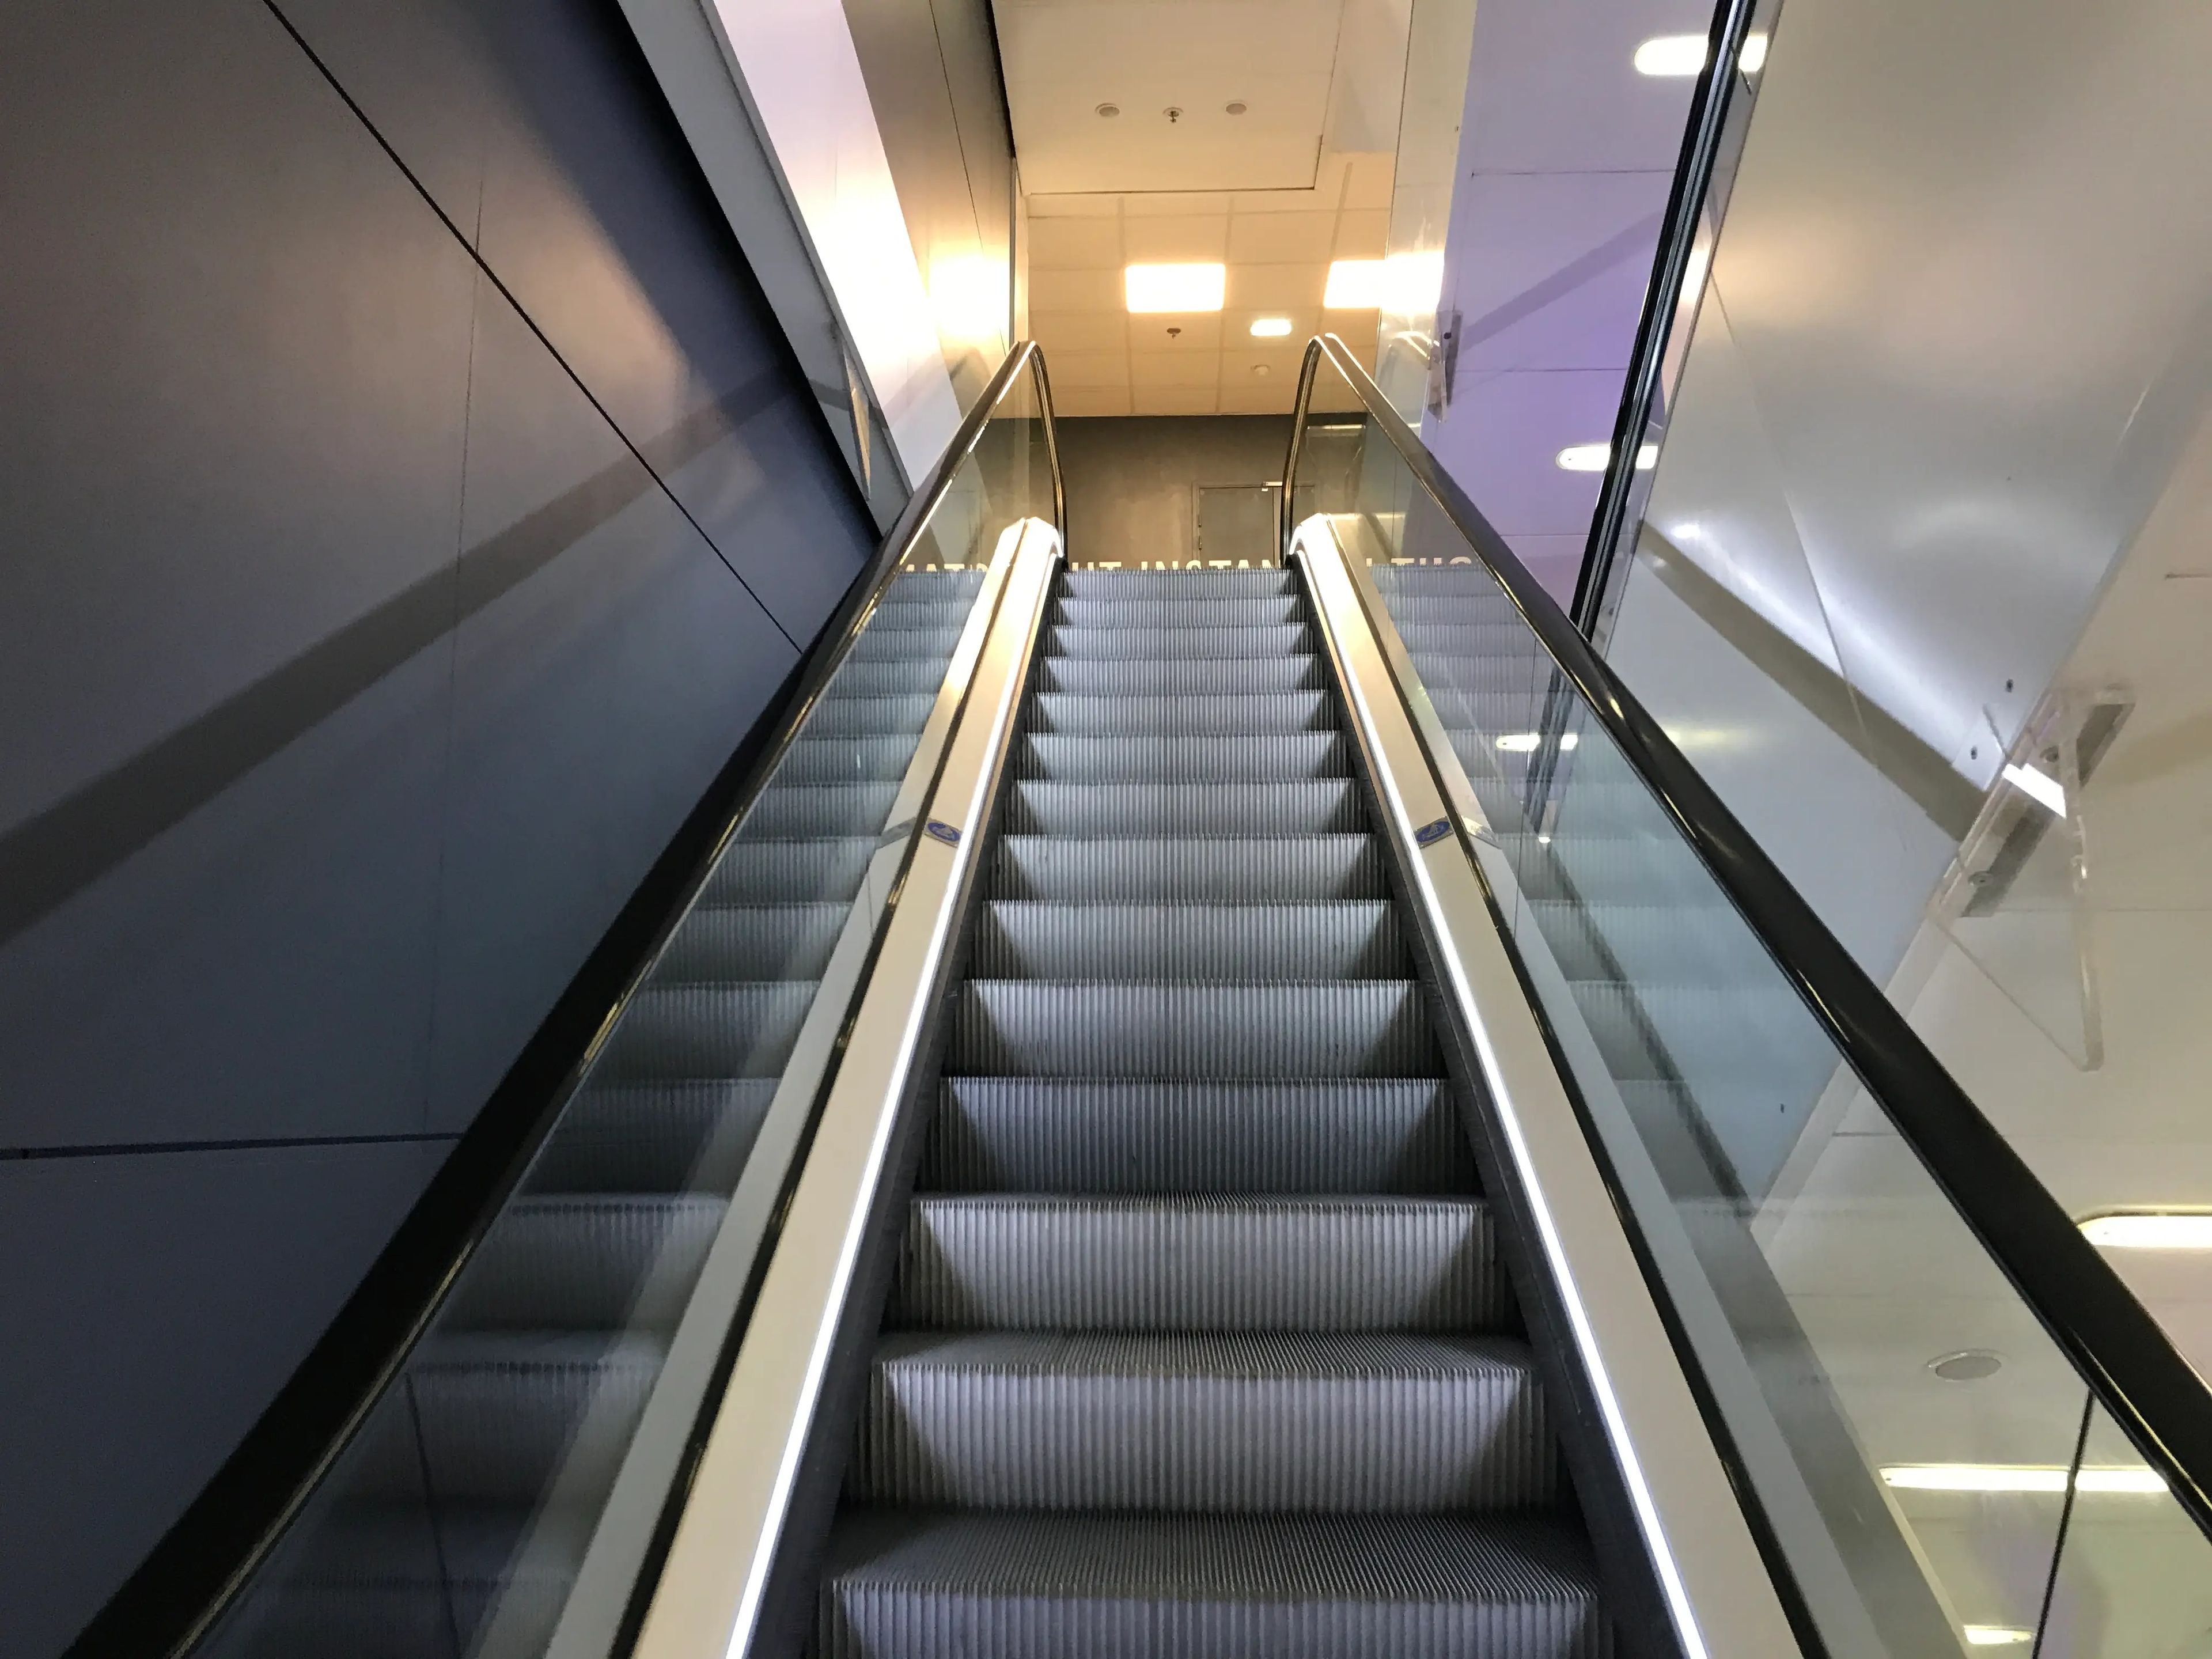 shot of escalators inside a building in paris